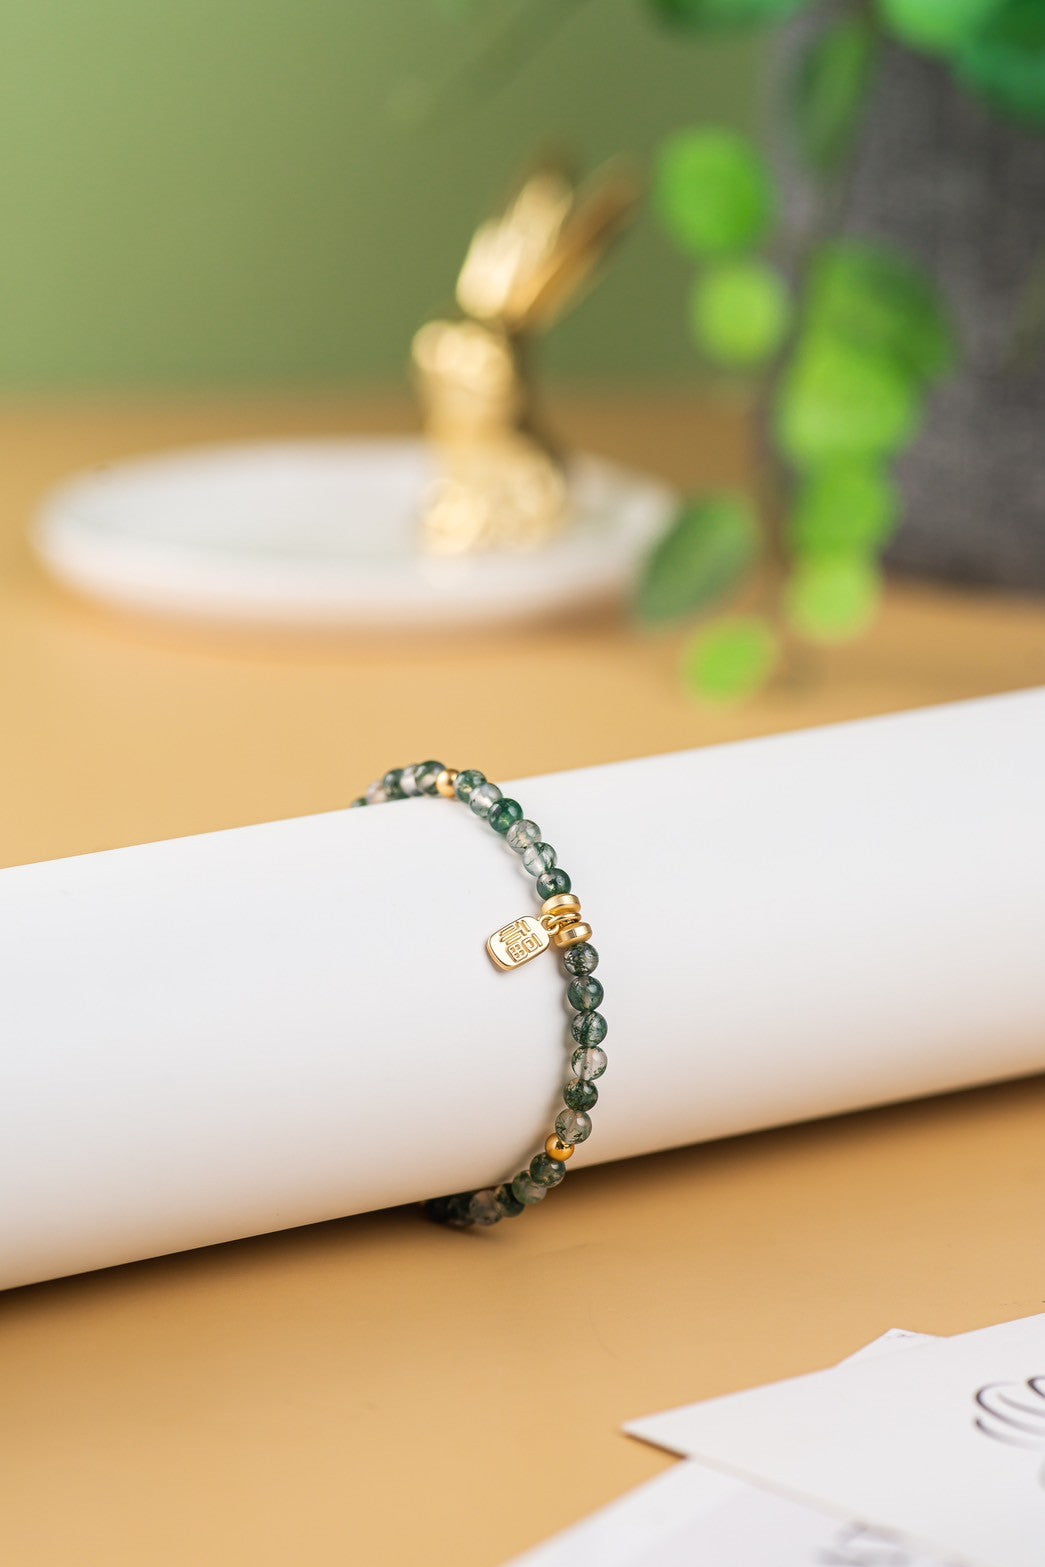 Agate bracelet, bracelet to enhance luck and finances.